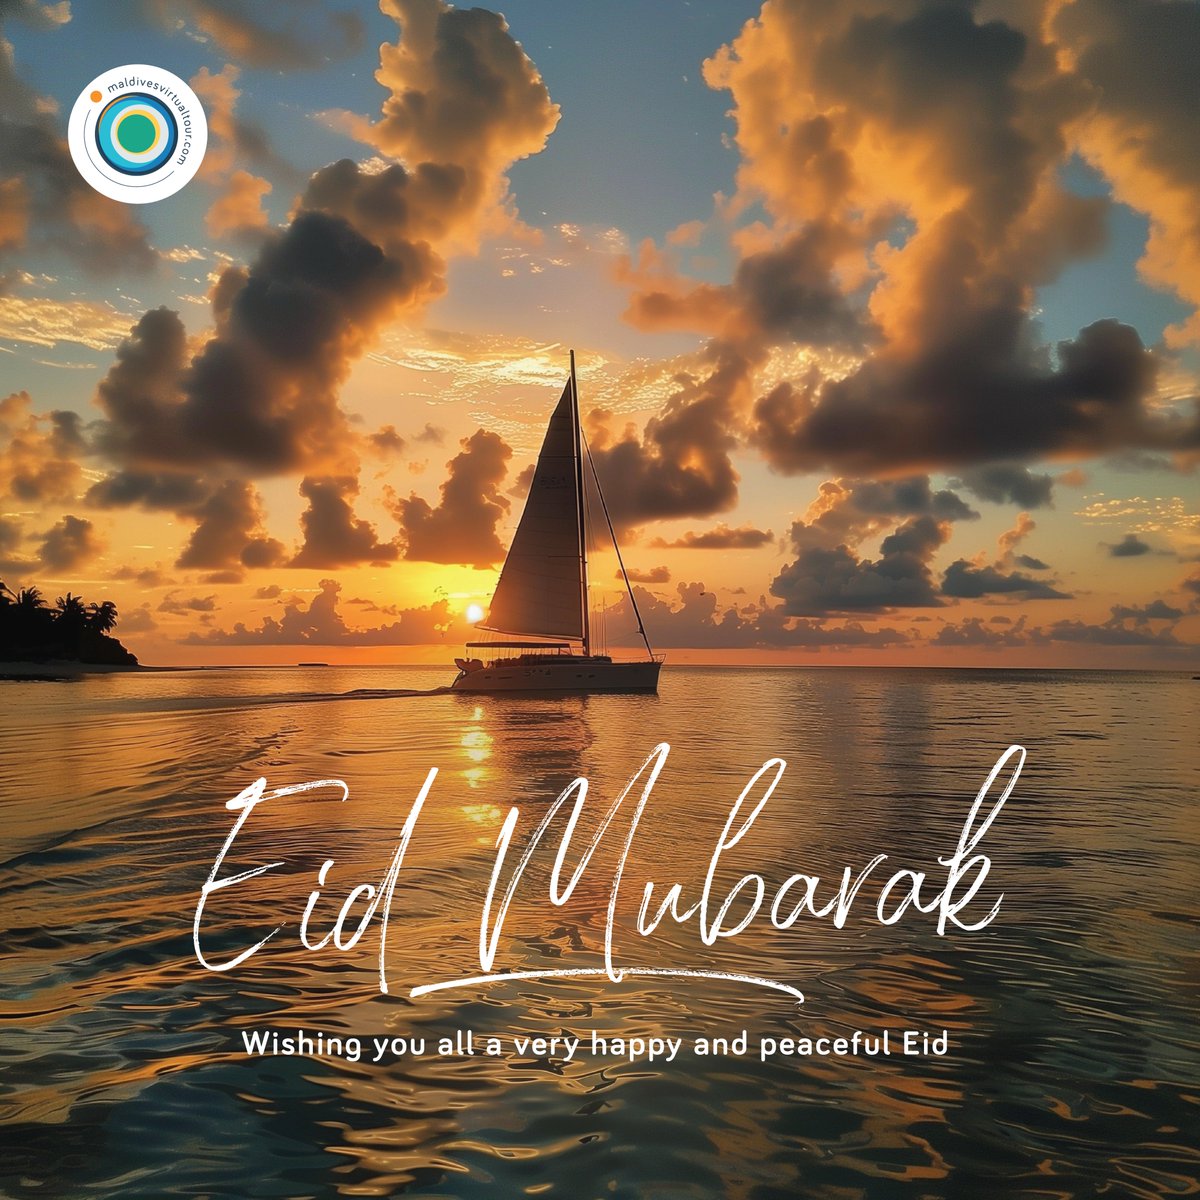 May the magic of this Eid bring peace, happiness, and prosperity. 🌙✨

#MaldivesVirtualTour #Maldives #VisitMaldives #Explore